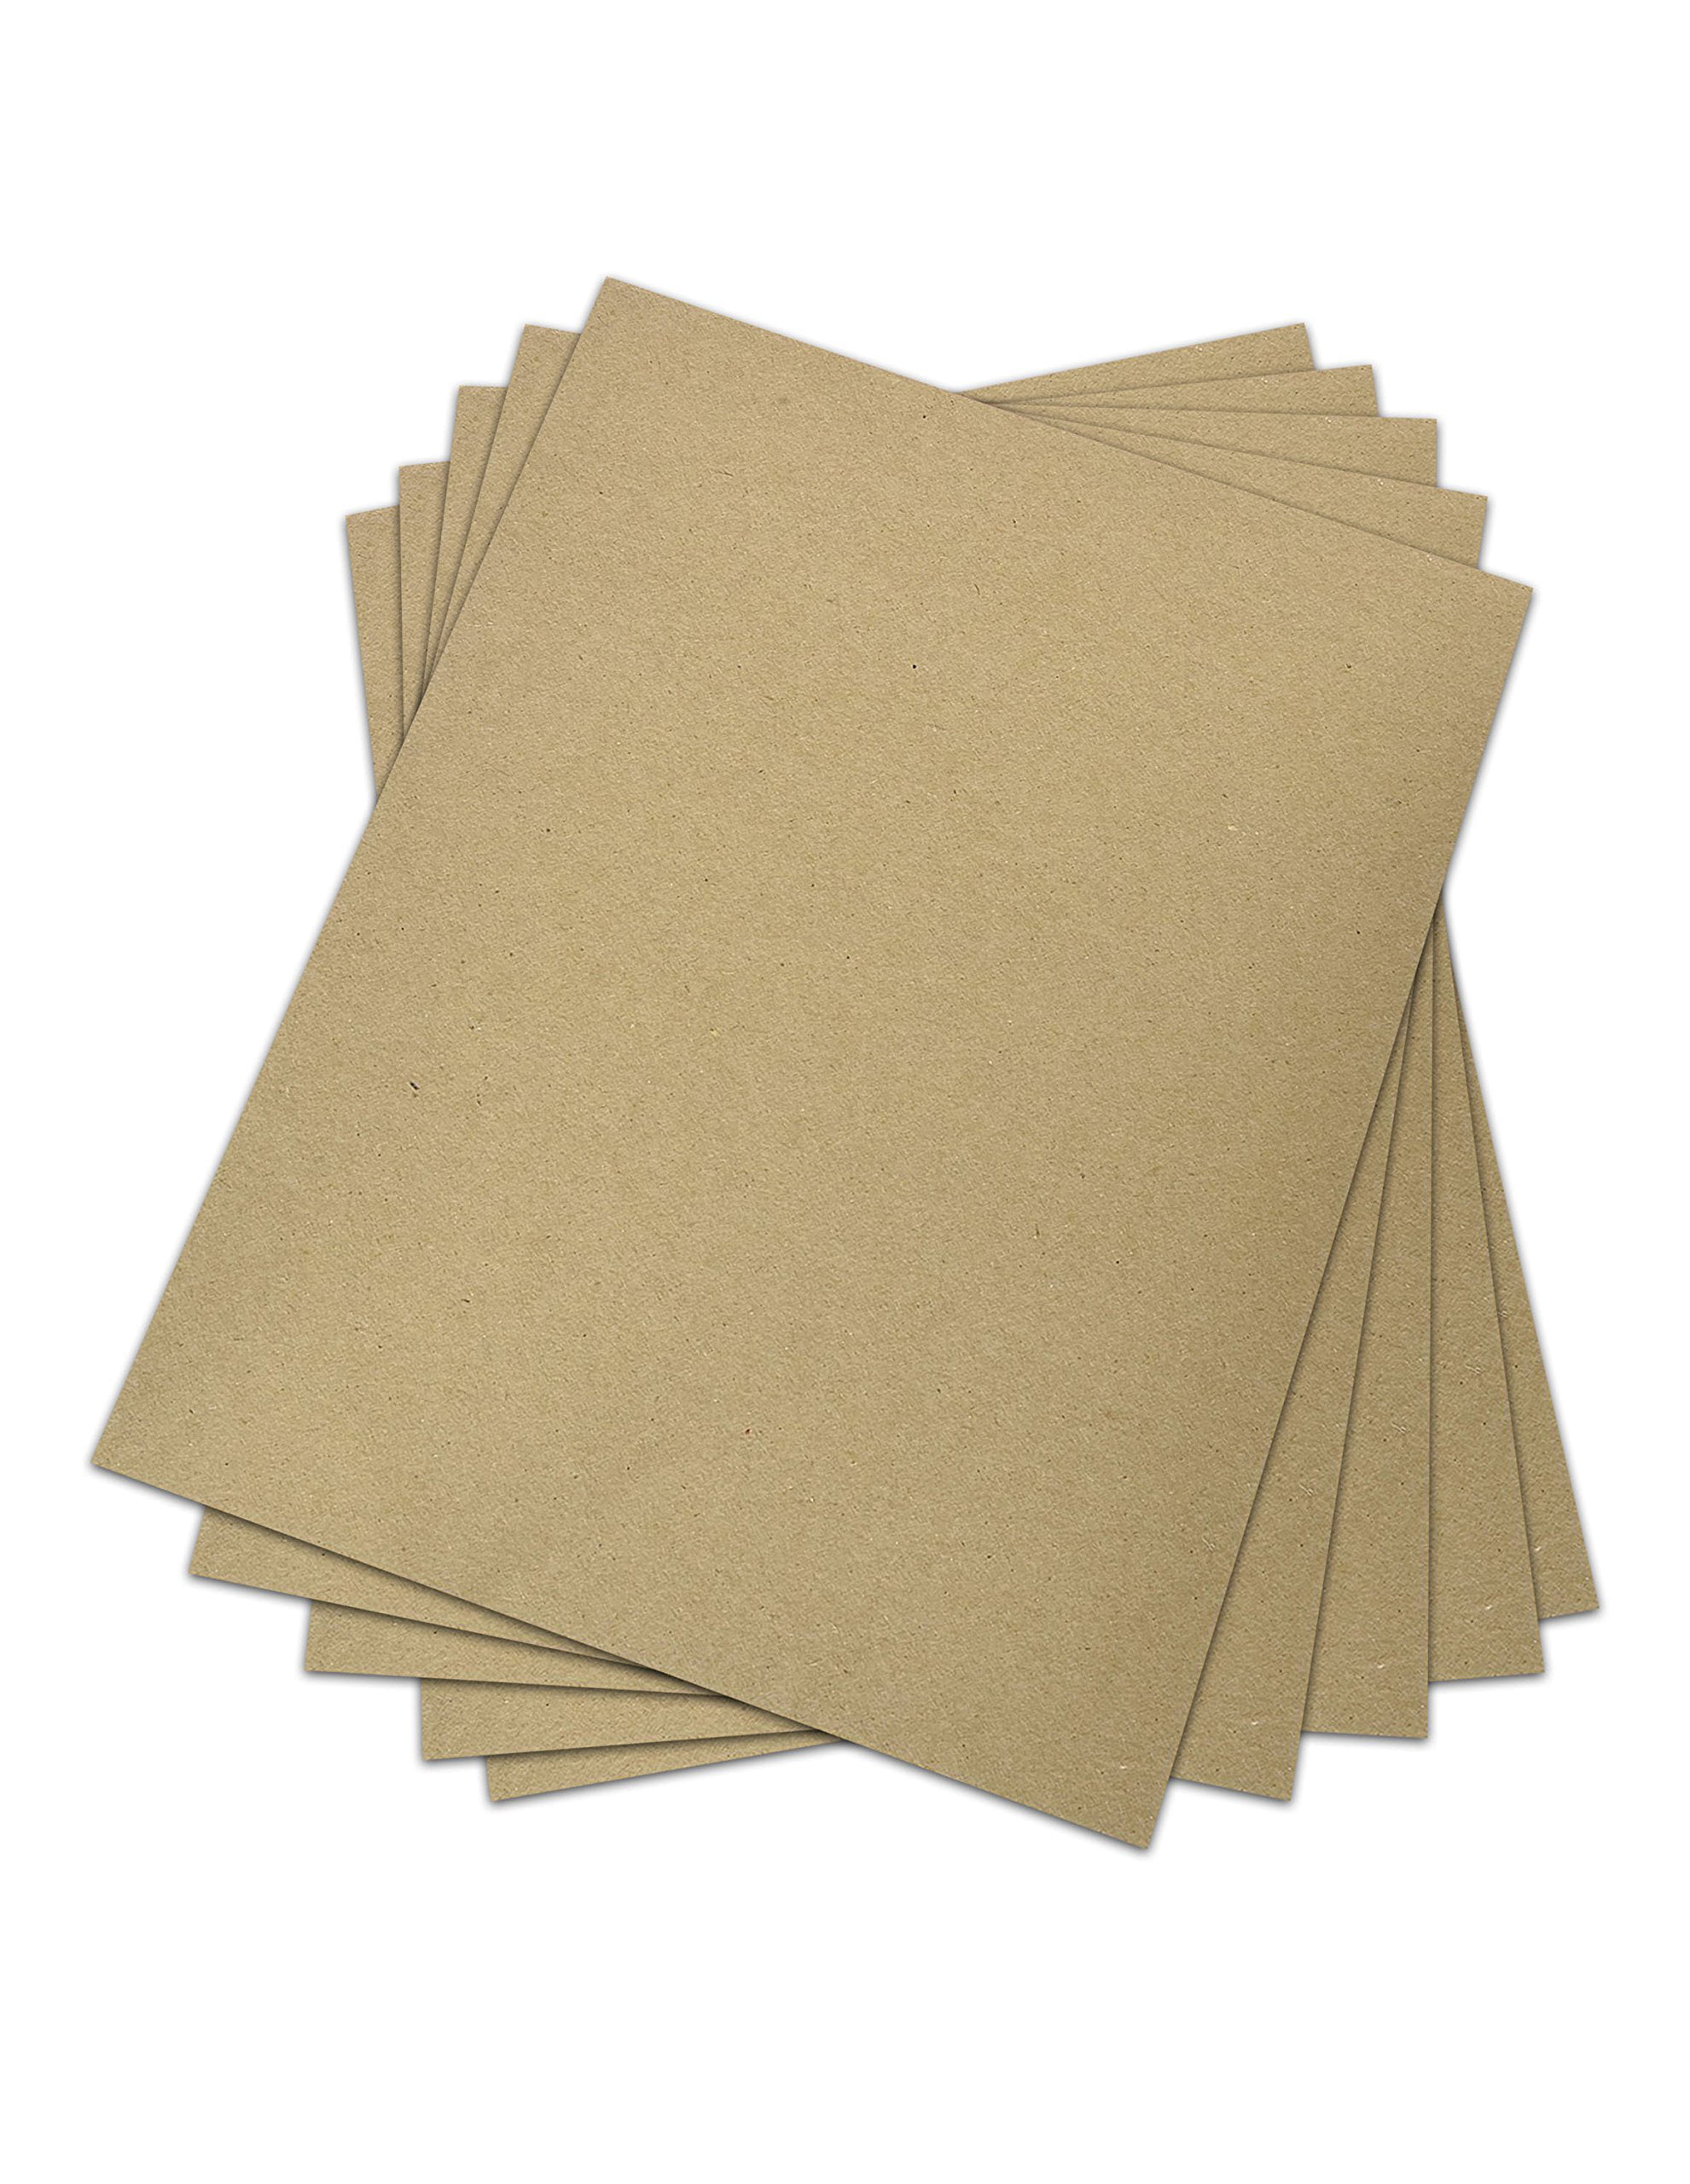 Vernier KidWind Chipboard Sheets Chipboard sheets:Education Supplies,  Quantity